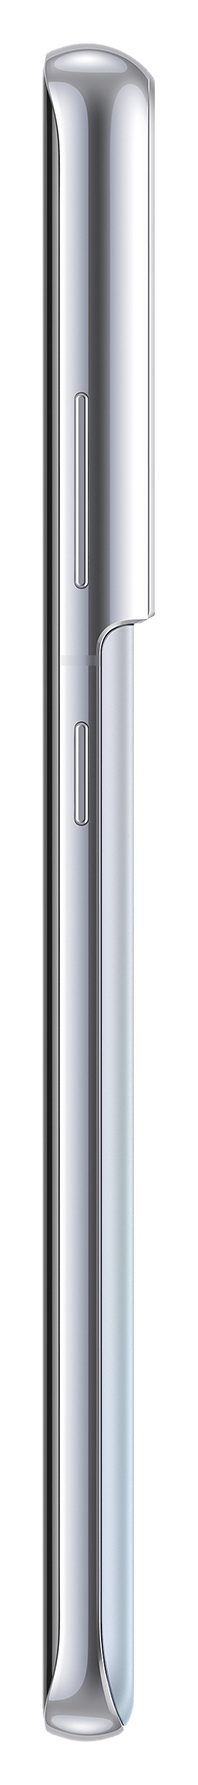 Samsung S21 Ultra silver side